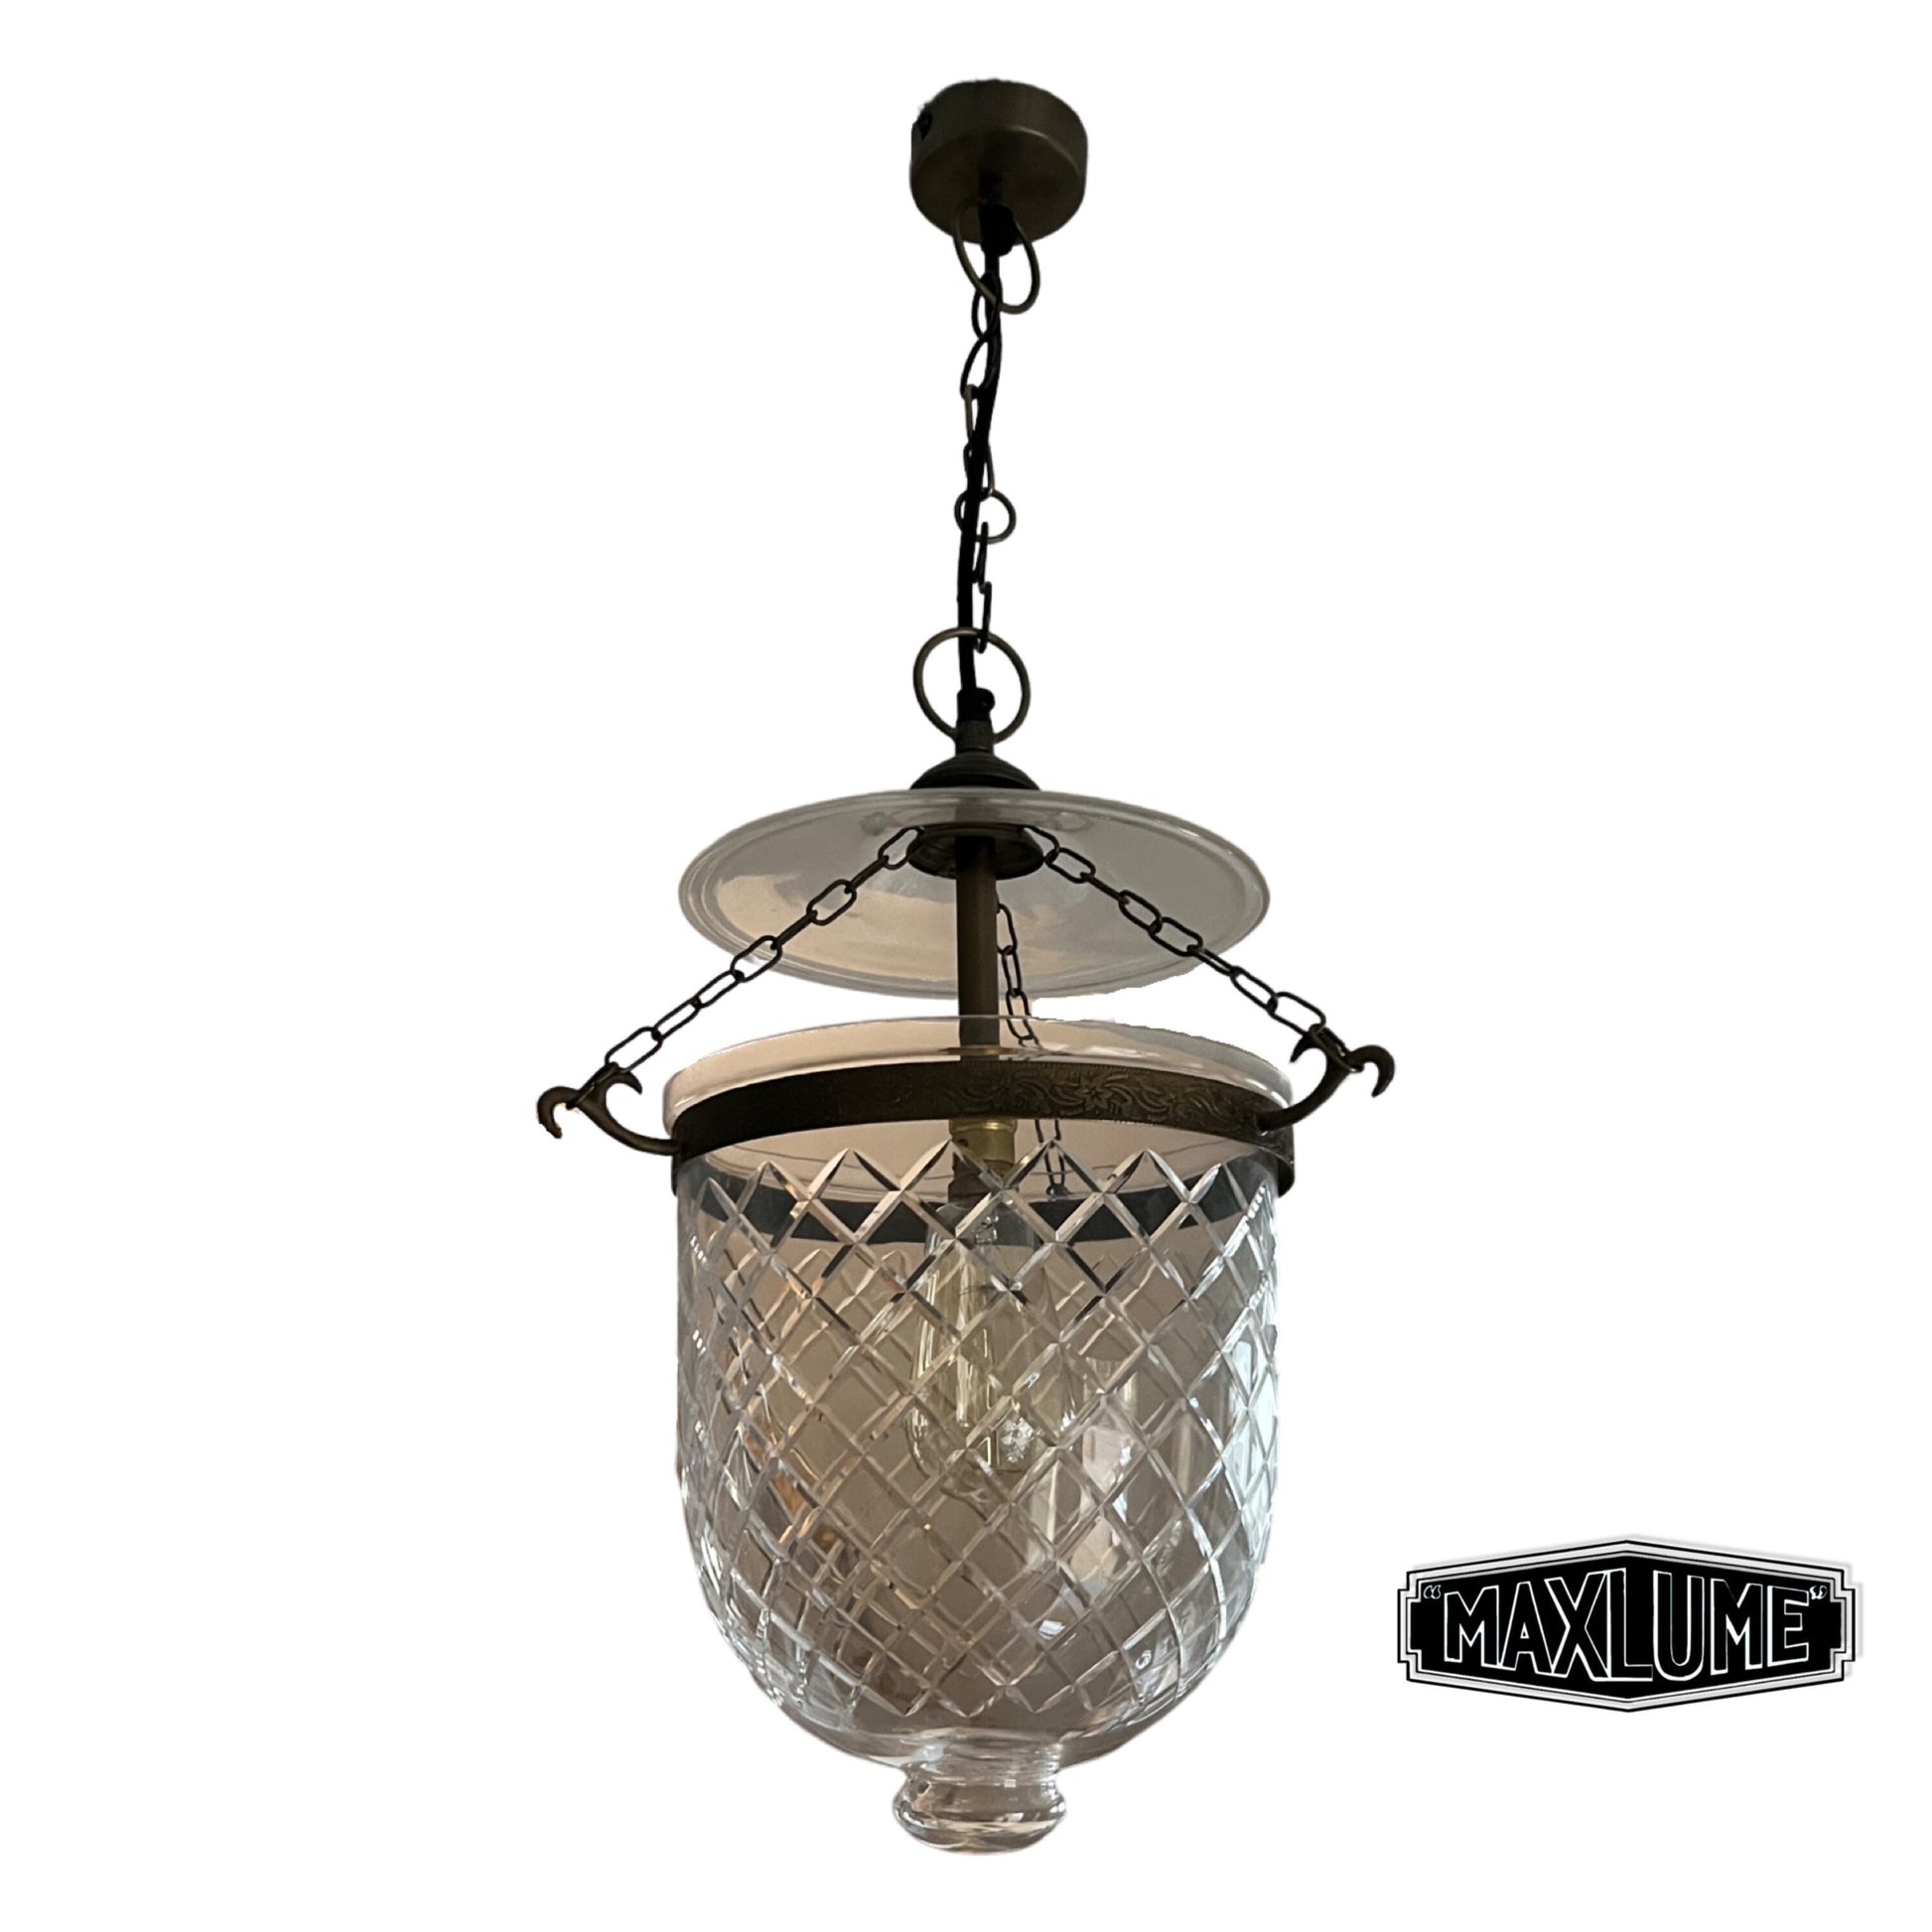 Maxlume ~ Bell Jar Glass Globe Lantern Luxury Chandelier Light ceiling dining room Antique Bronze Georgian Ceiling Pendant Bee